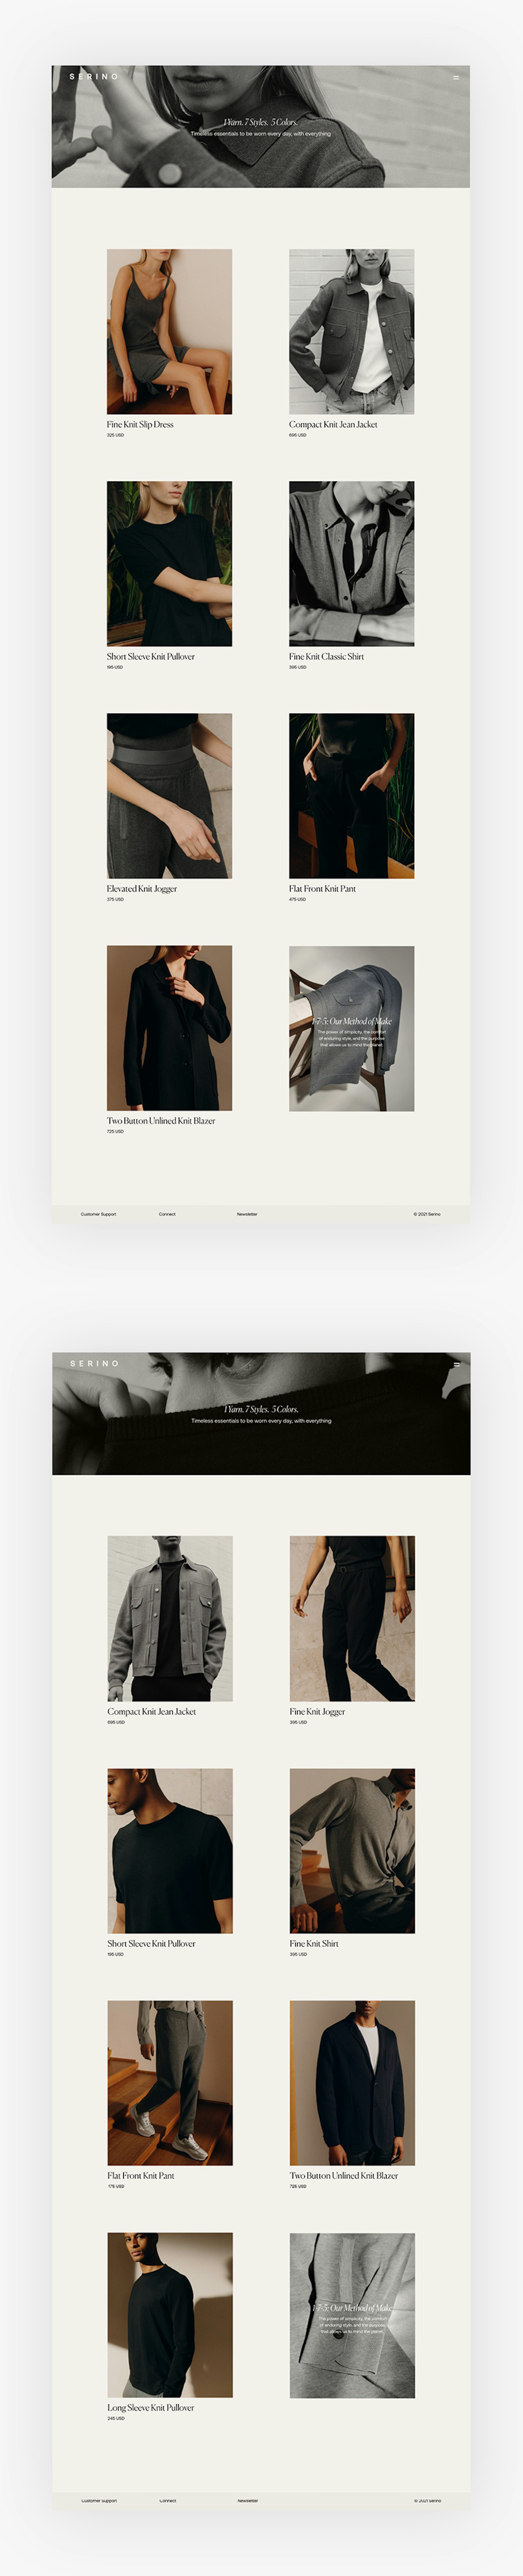 Serino Studio - Ecommerce Shopify Website Design + Development Comps